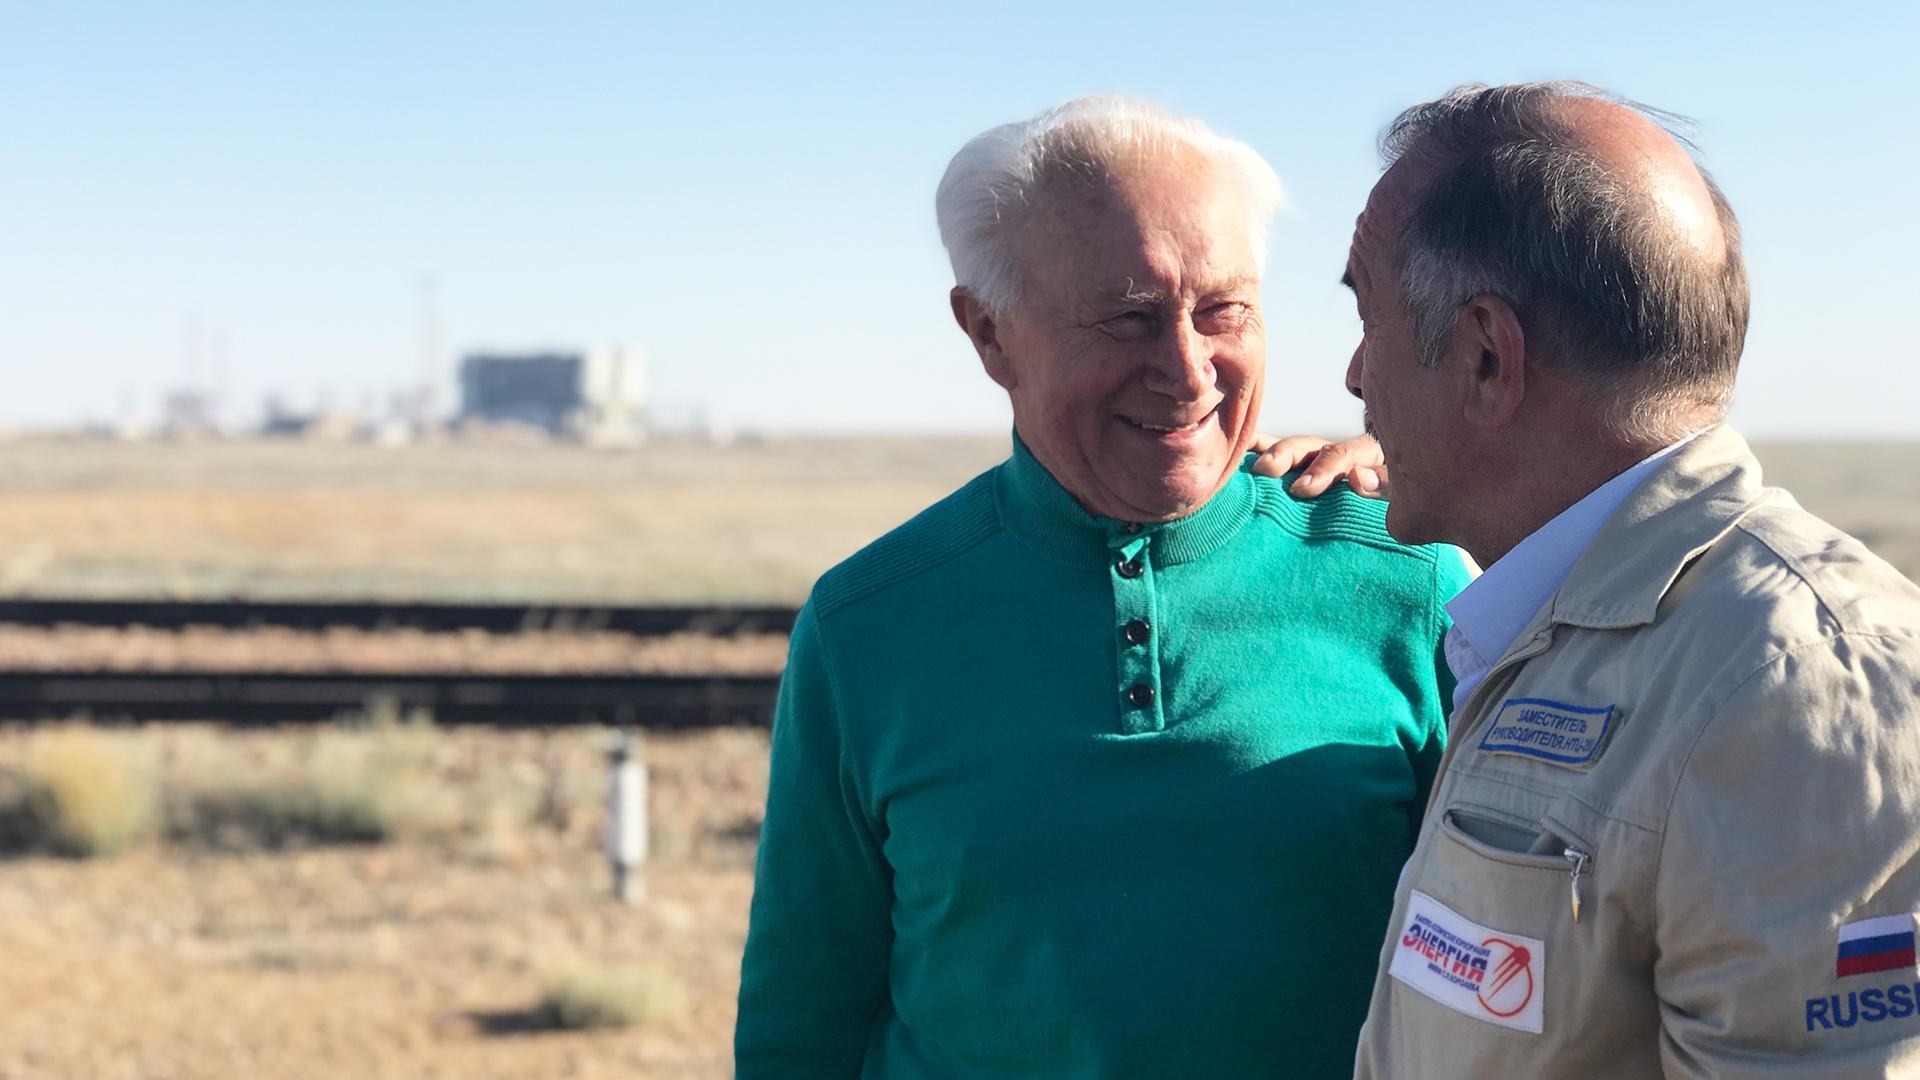 A warm reunion with cosmonaut Vinogradov